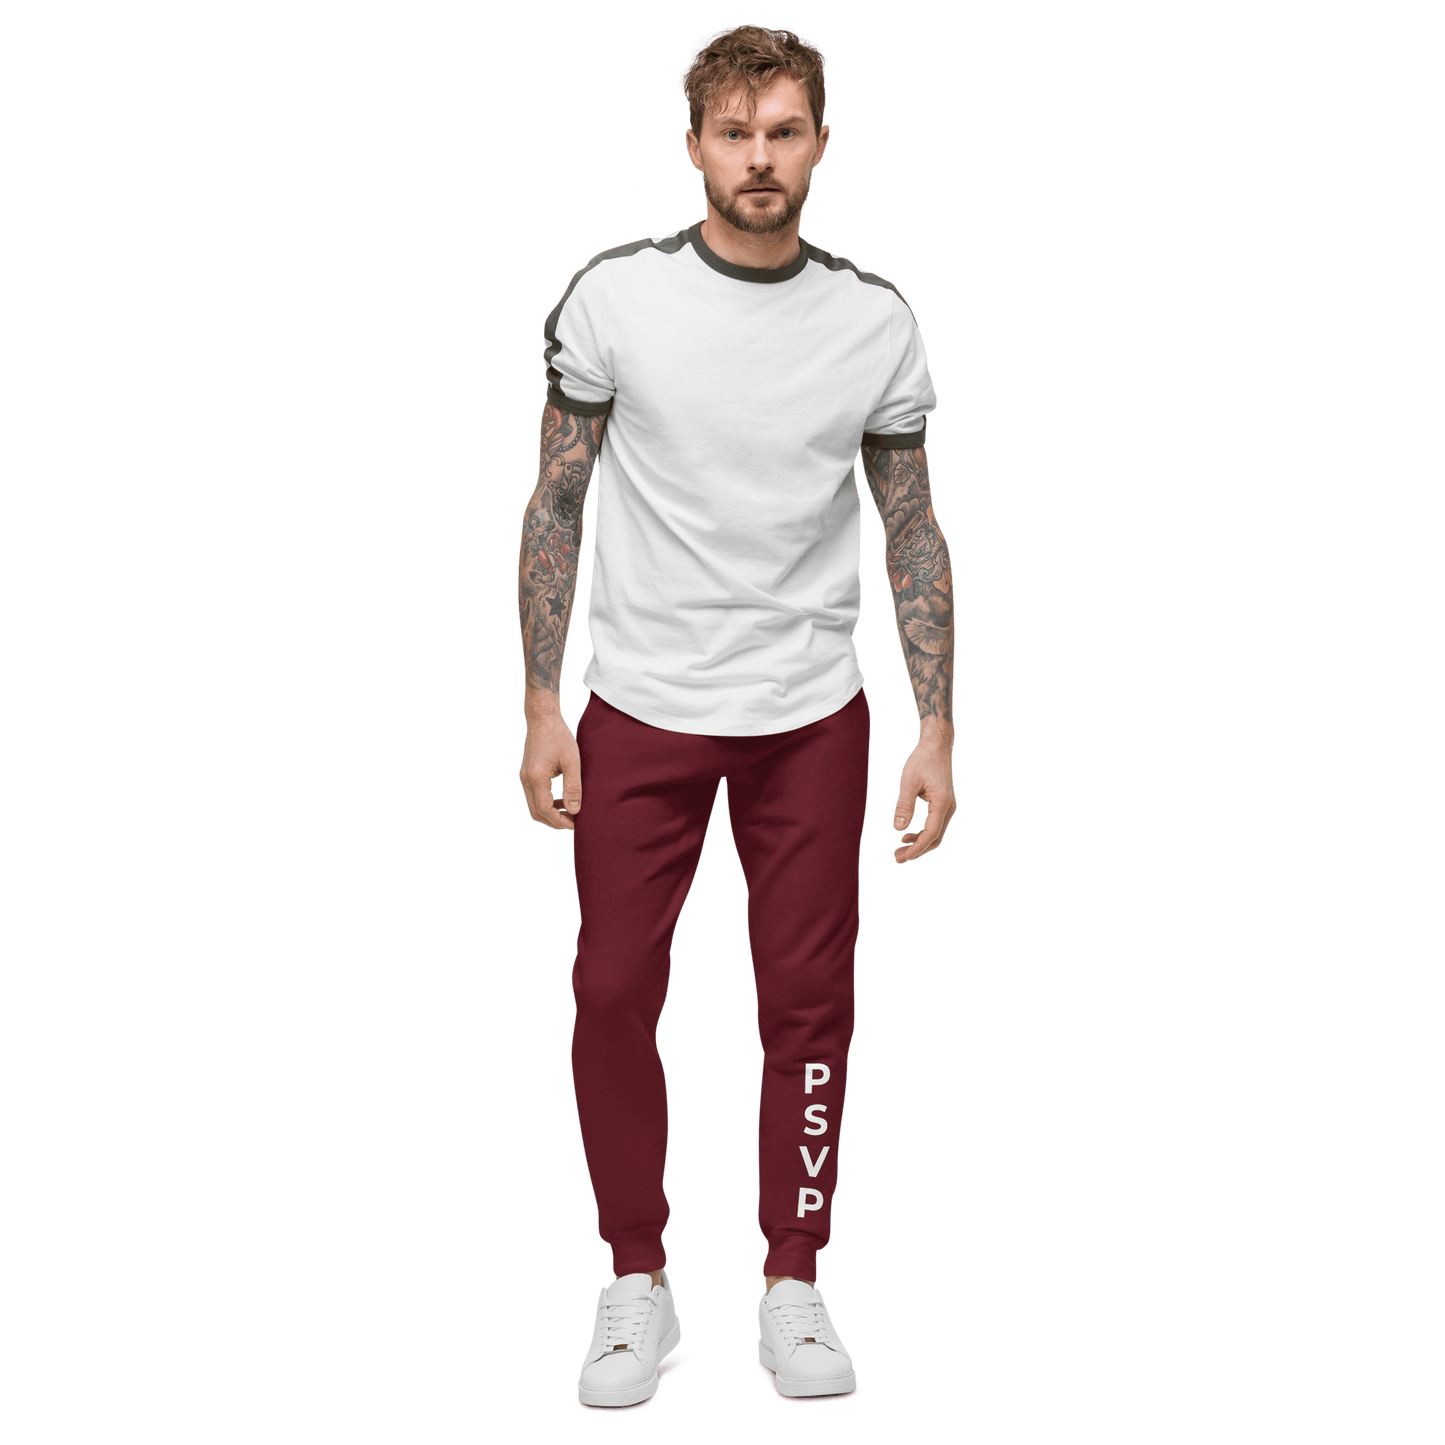 Comfy Maroon Fleece Sweatpants - PSVP | Sweatpants | PARADIS SVP